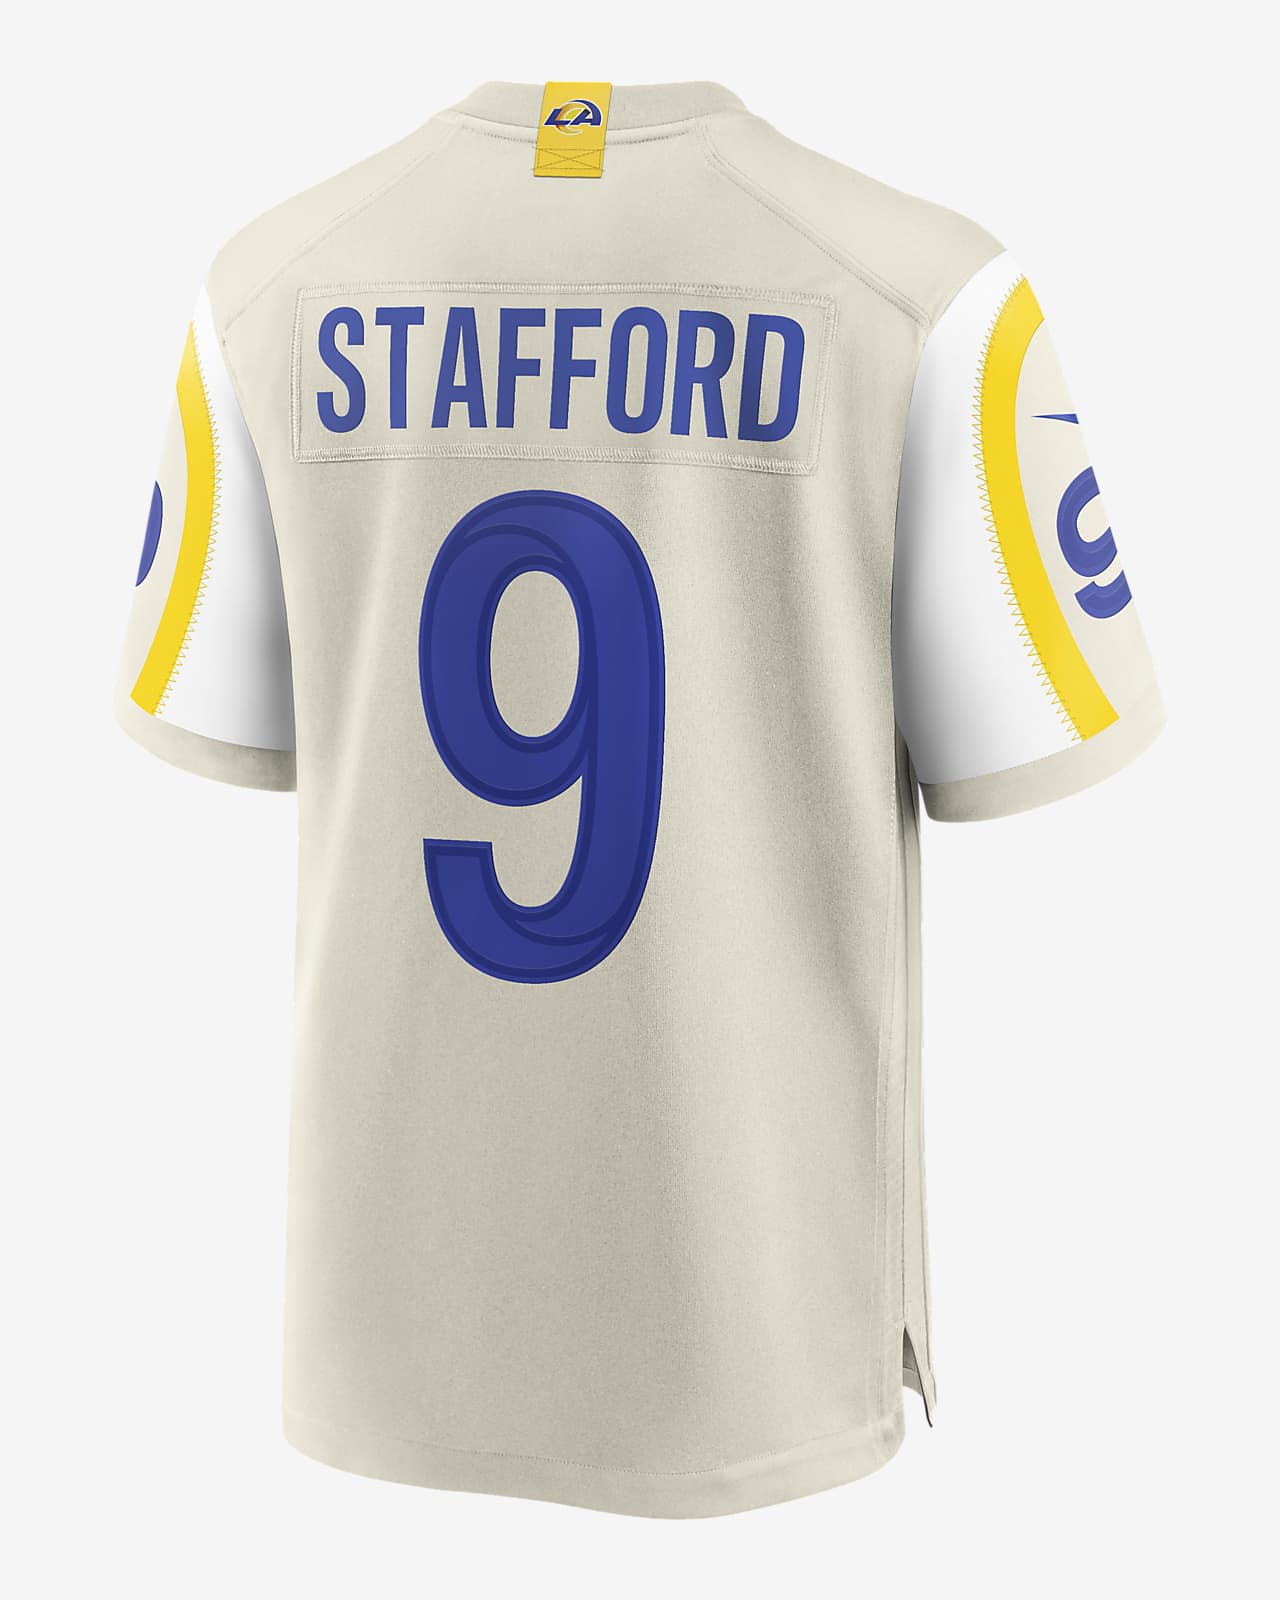 NFL Los Angeles Rams (Matthew Stafford) Men's Game Football Jersey